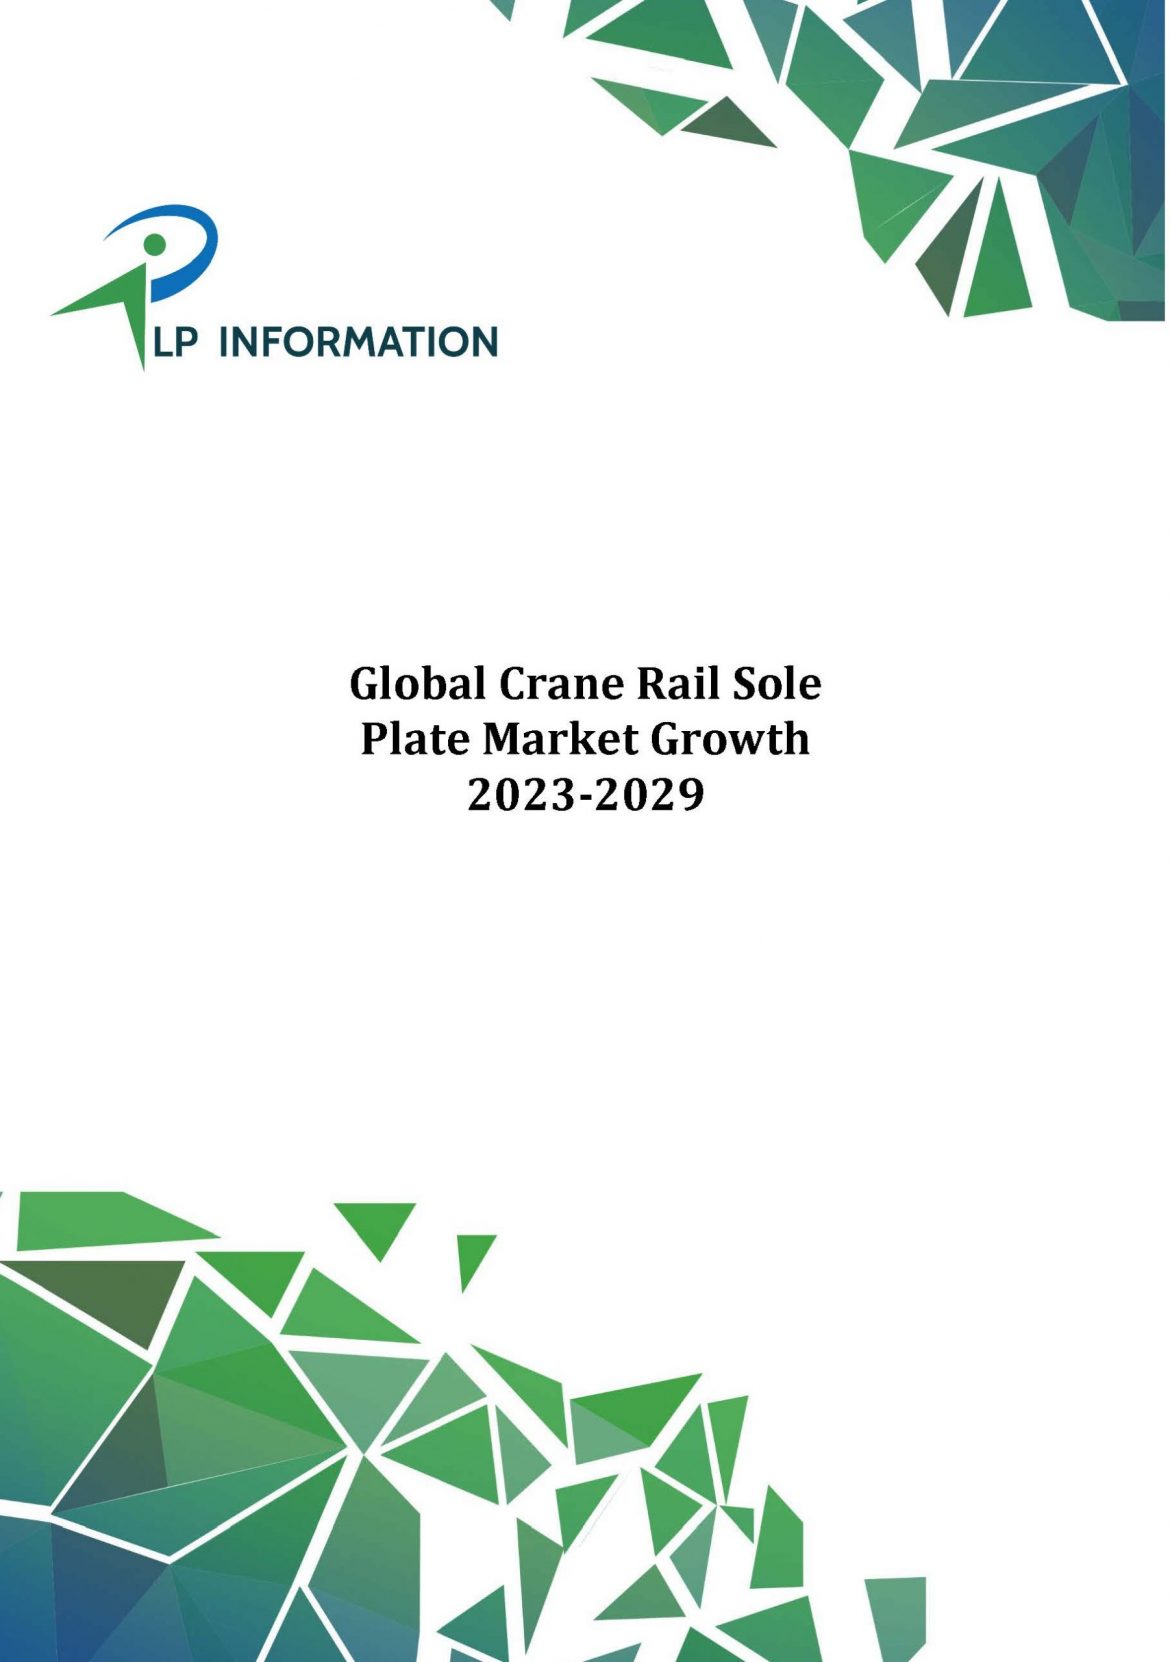 Global Crane Rail Sole Plate Market Growth 2023-2029